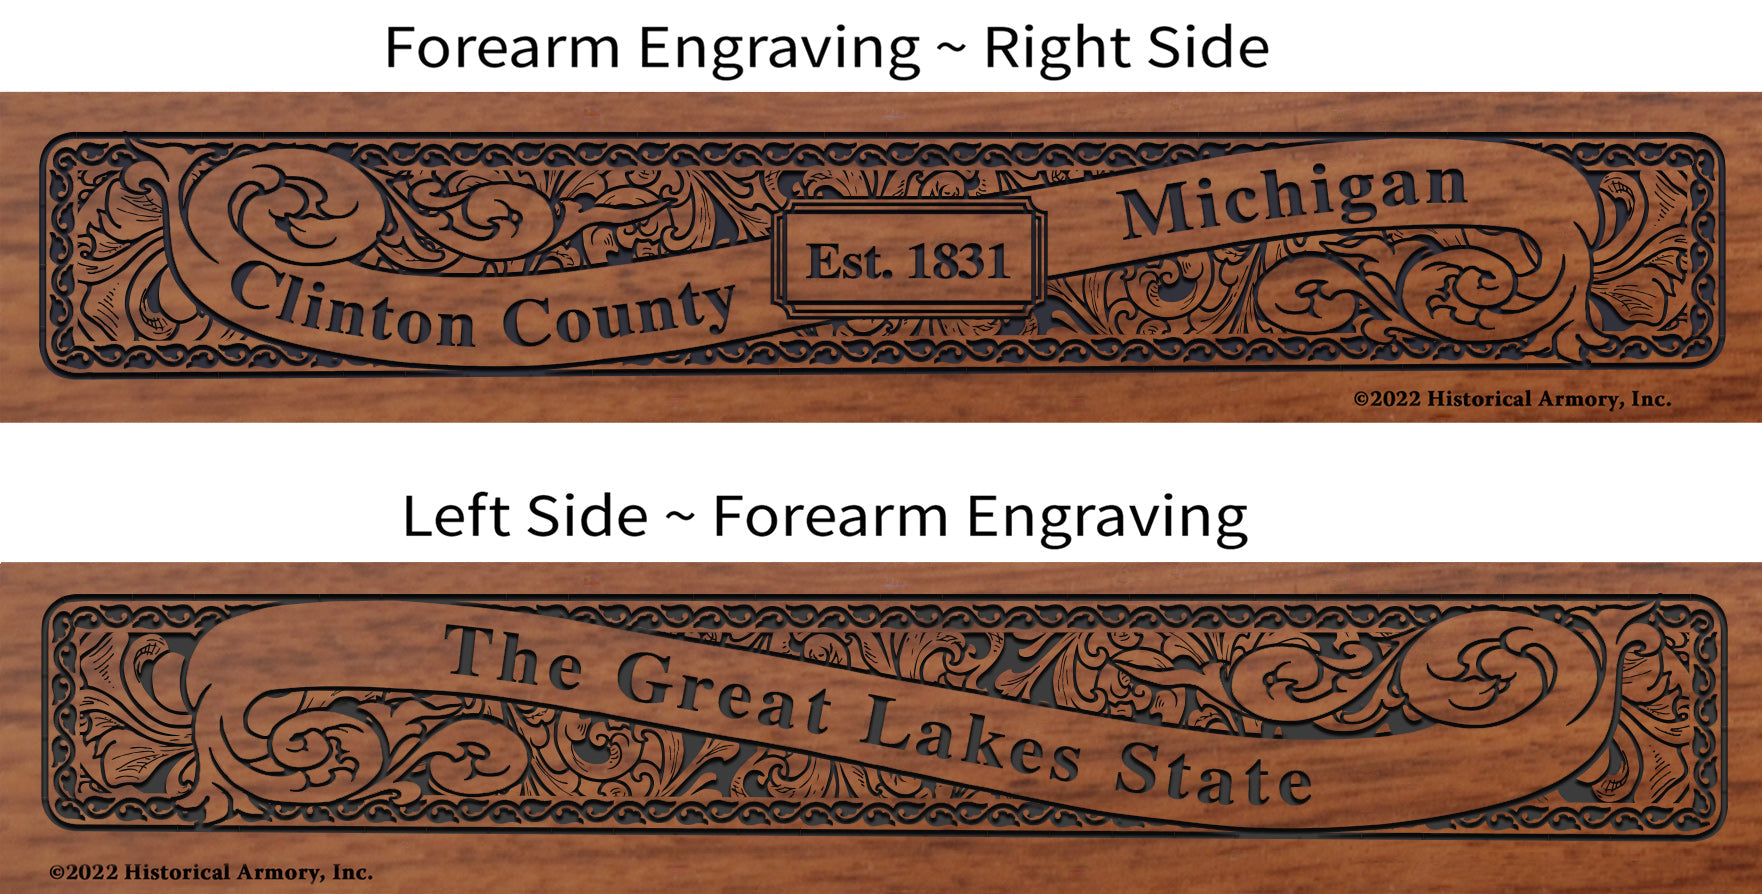 Clinton County Michigan Engraved Rifle Forearm